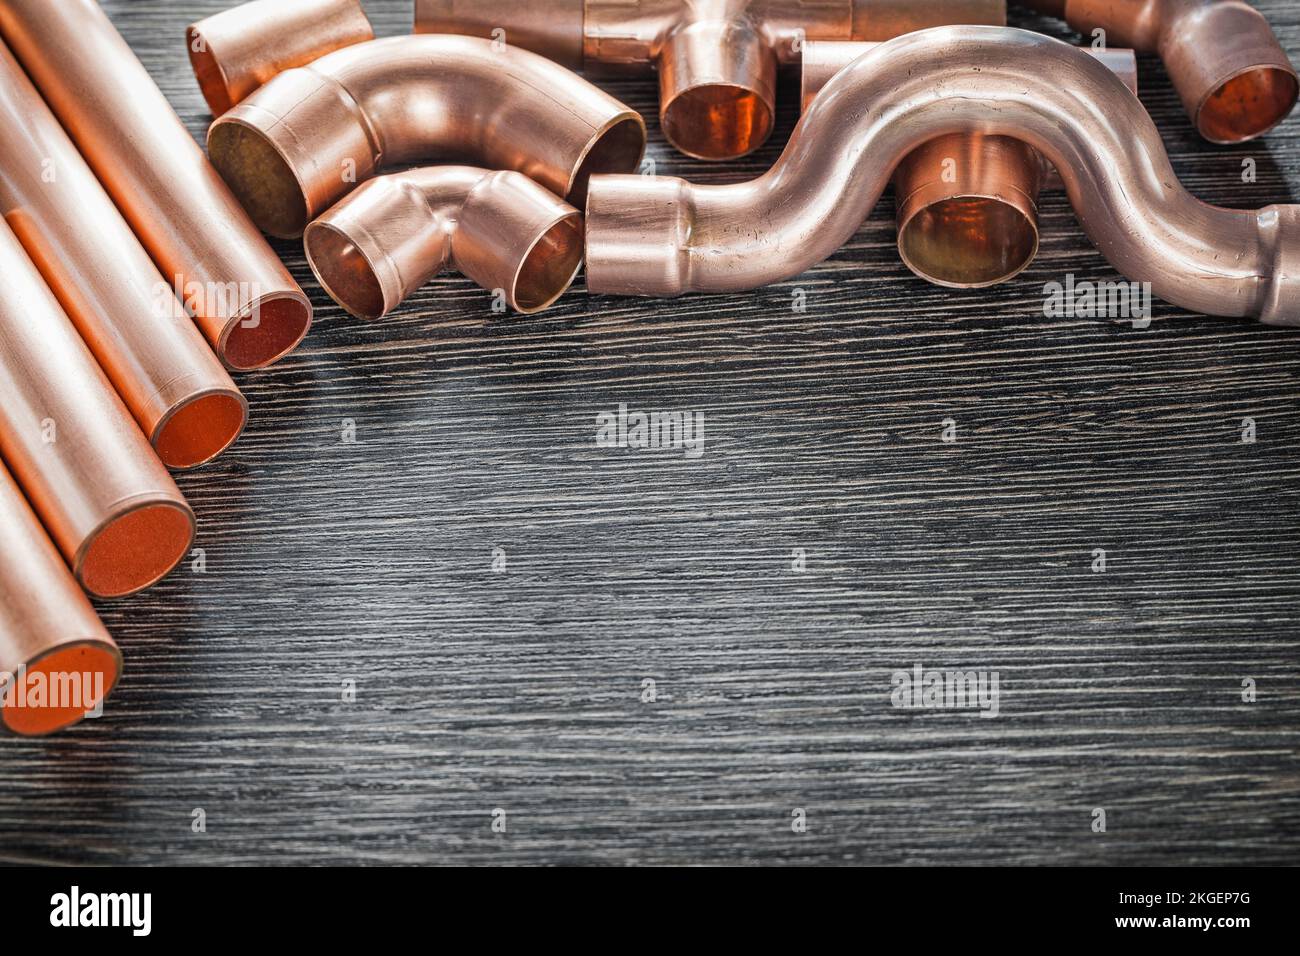 Plumbing brass water pipe fittings on wooden board. Stock Photo